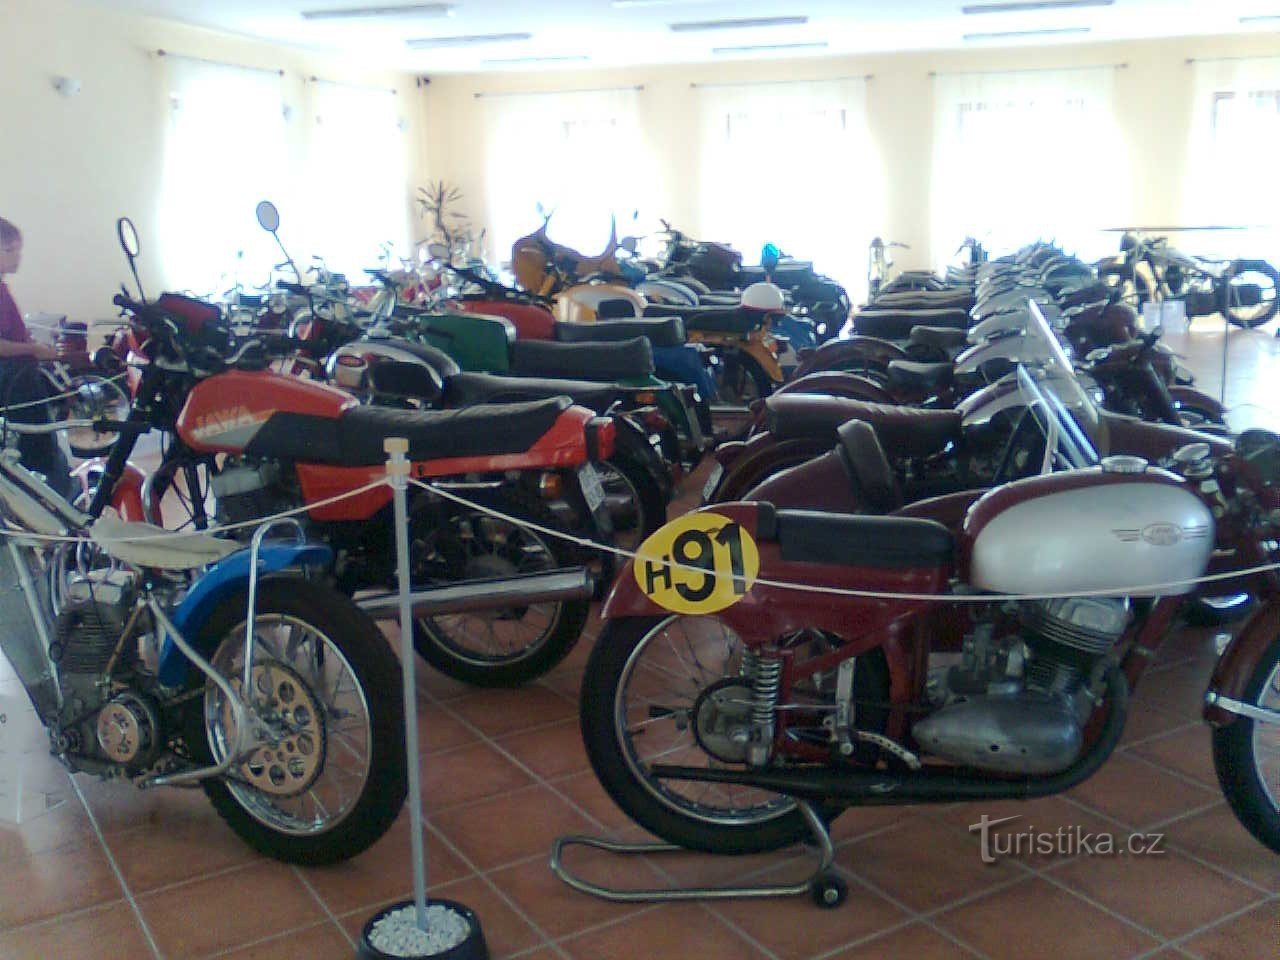 Musée de la moto de Křivoklát